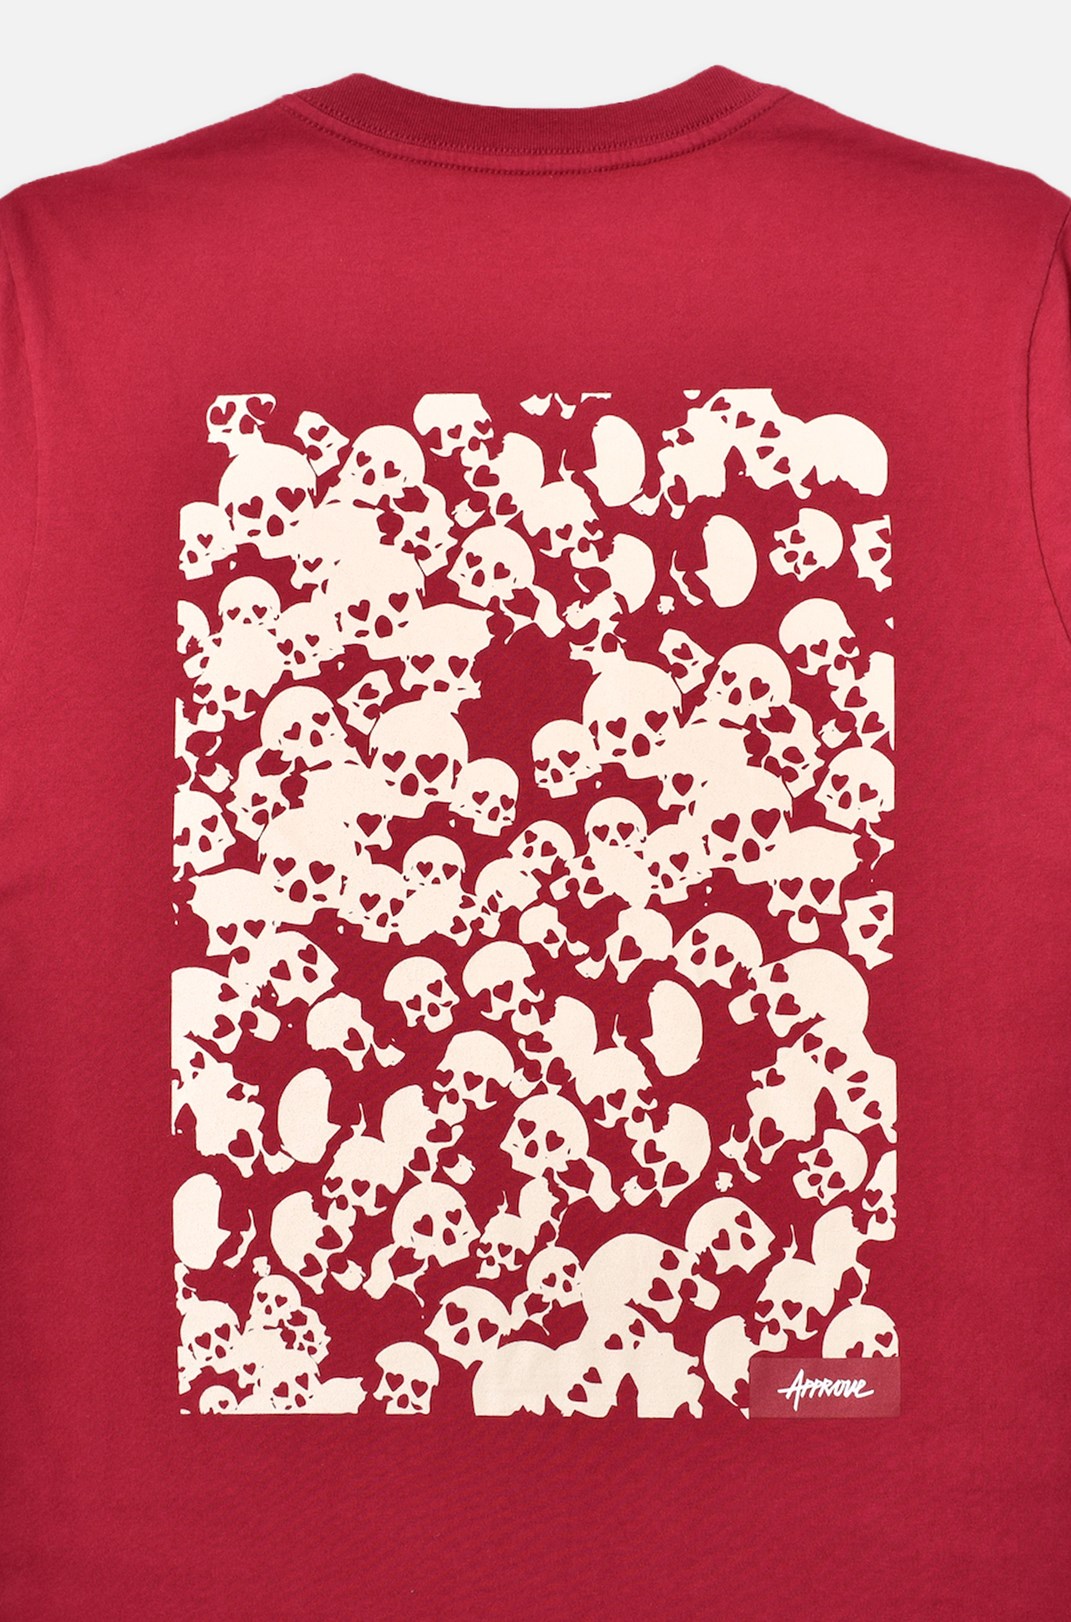 Camiseta Bold Approve Skull And Bones Bordô